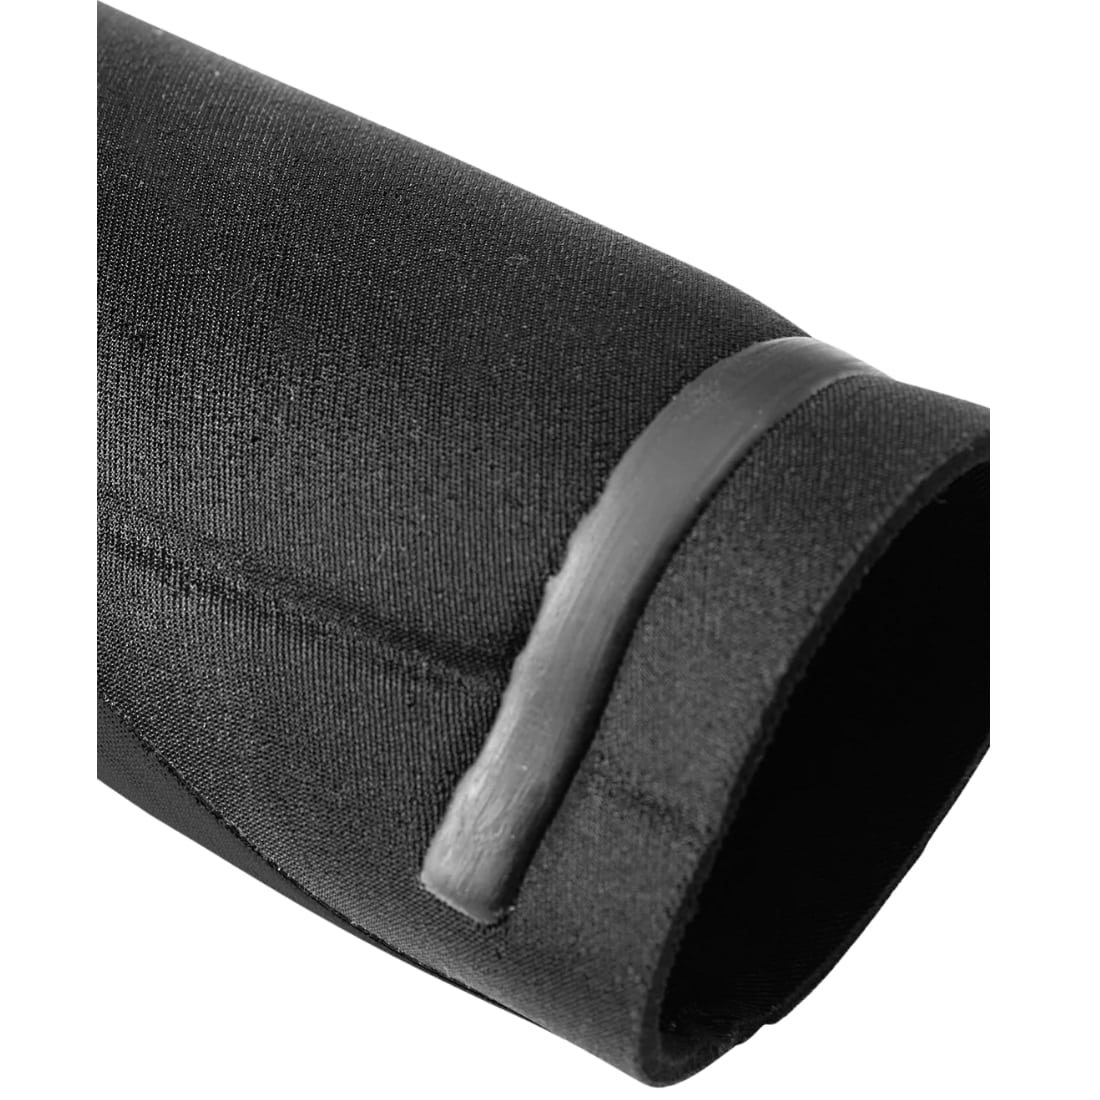 Volcom 3/2mm Modulator Chest Zip Wetsuit 2023 - Black - Mens Full Length Wetsuit by Volcom